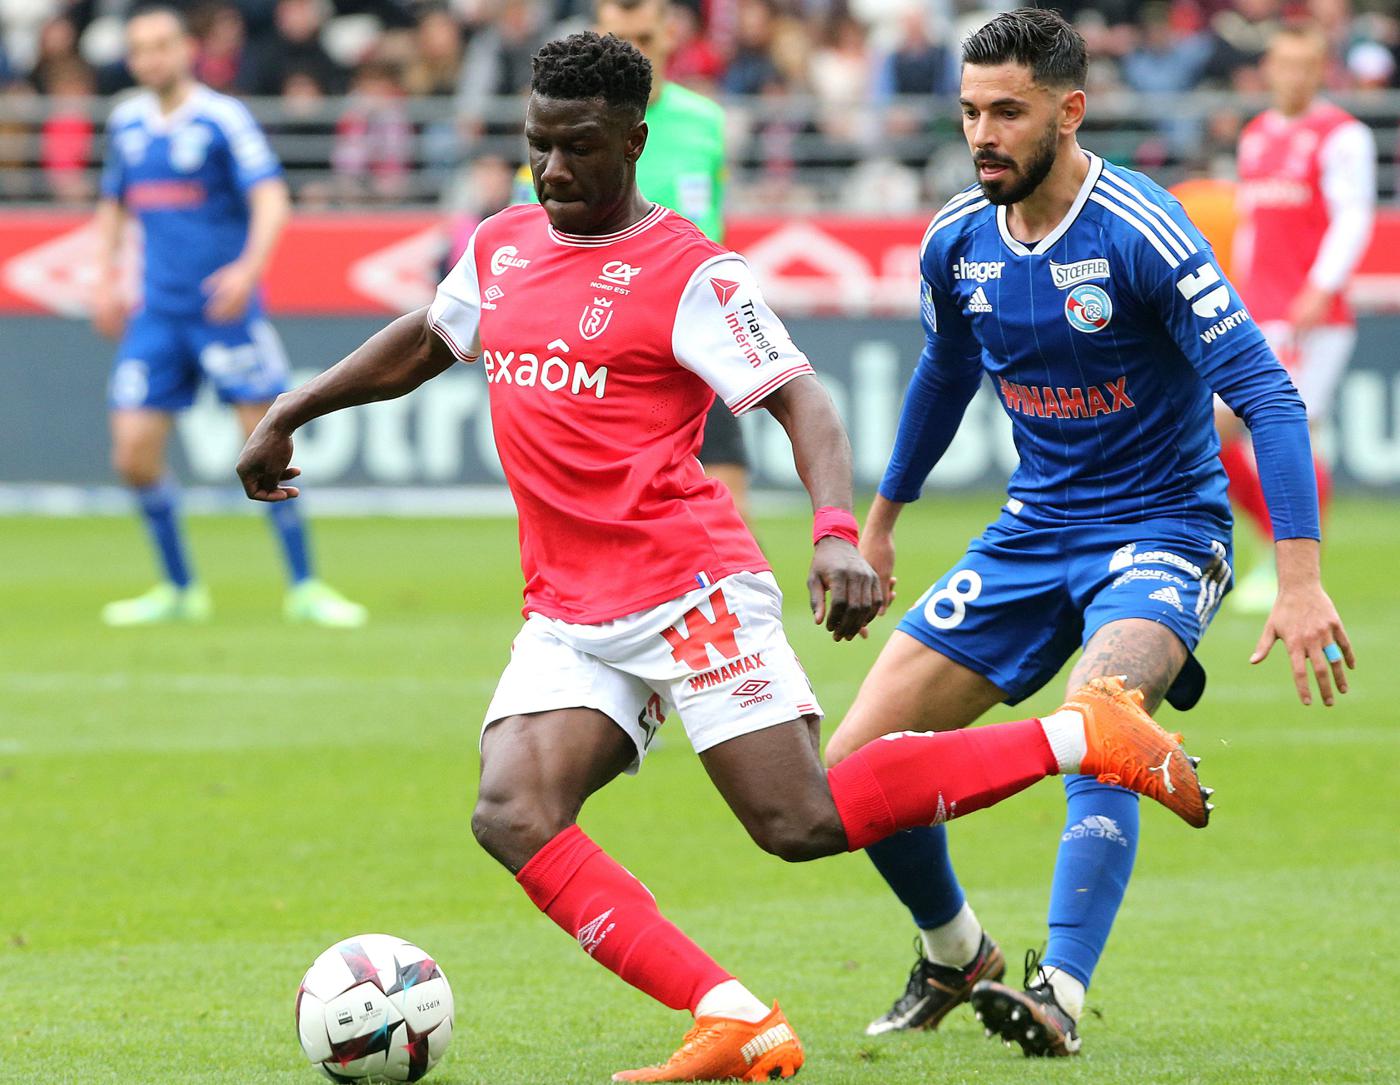 Reims - Strasbourg - 0:2. French Championship, round 32. Match Review, Statistics